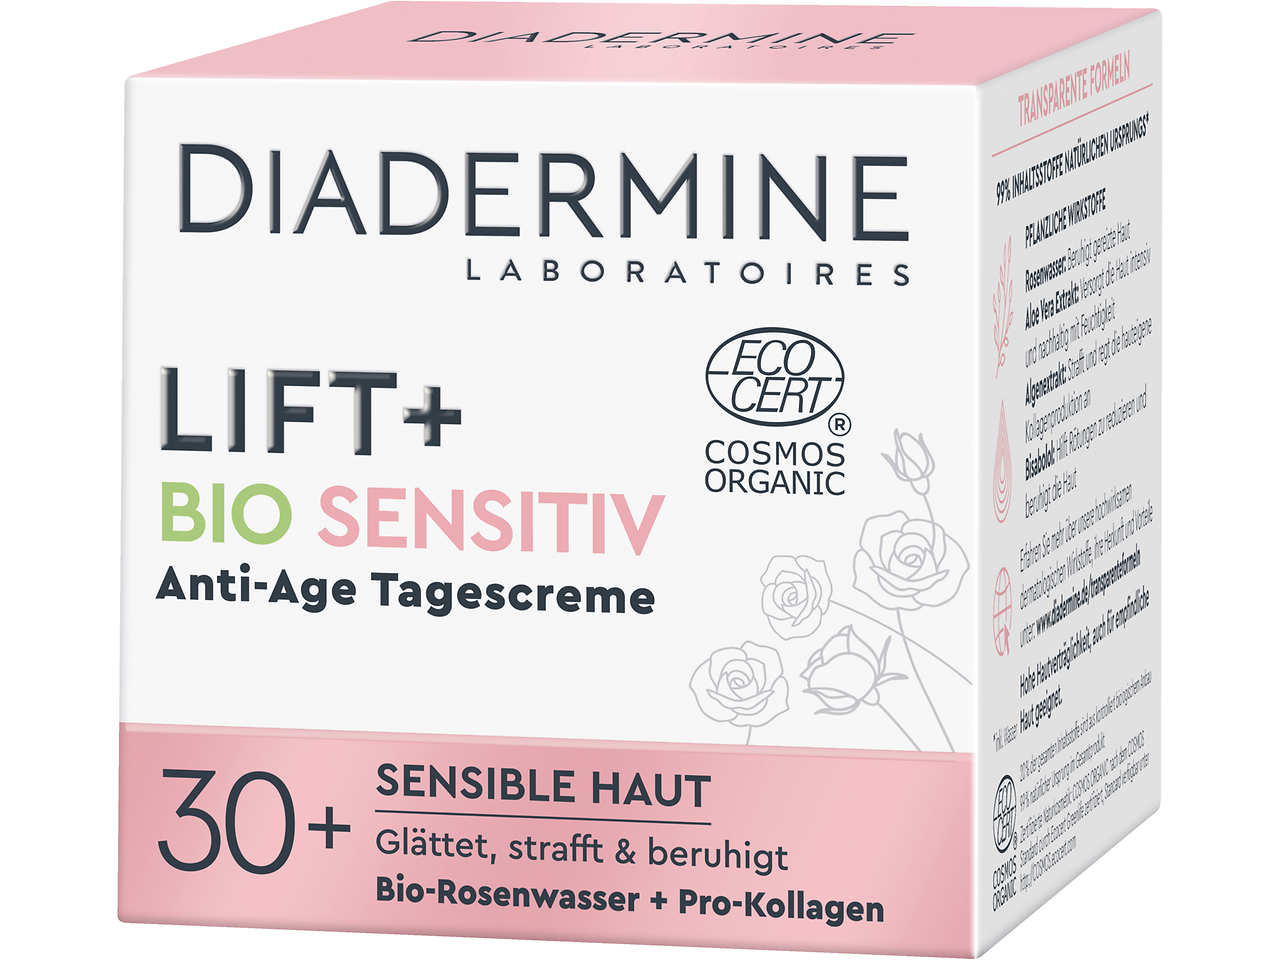 DIADERMINE LIFT+ BIO SENSITIV Anti-Age Tagescreme (Verpackung)